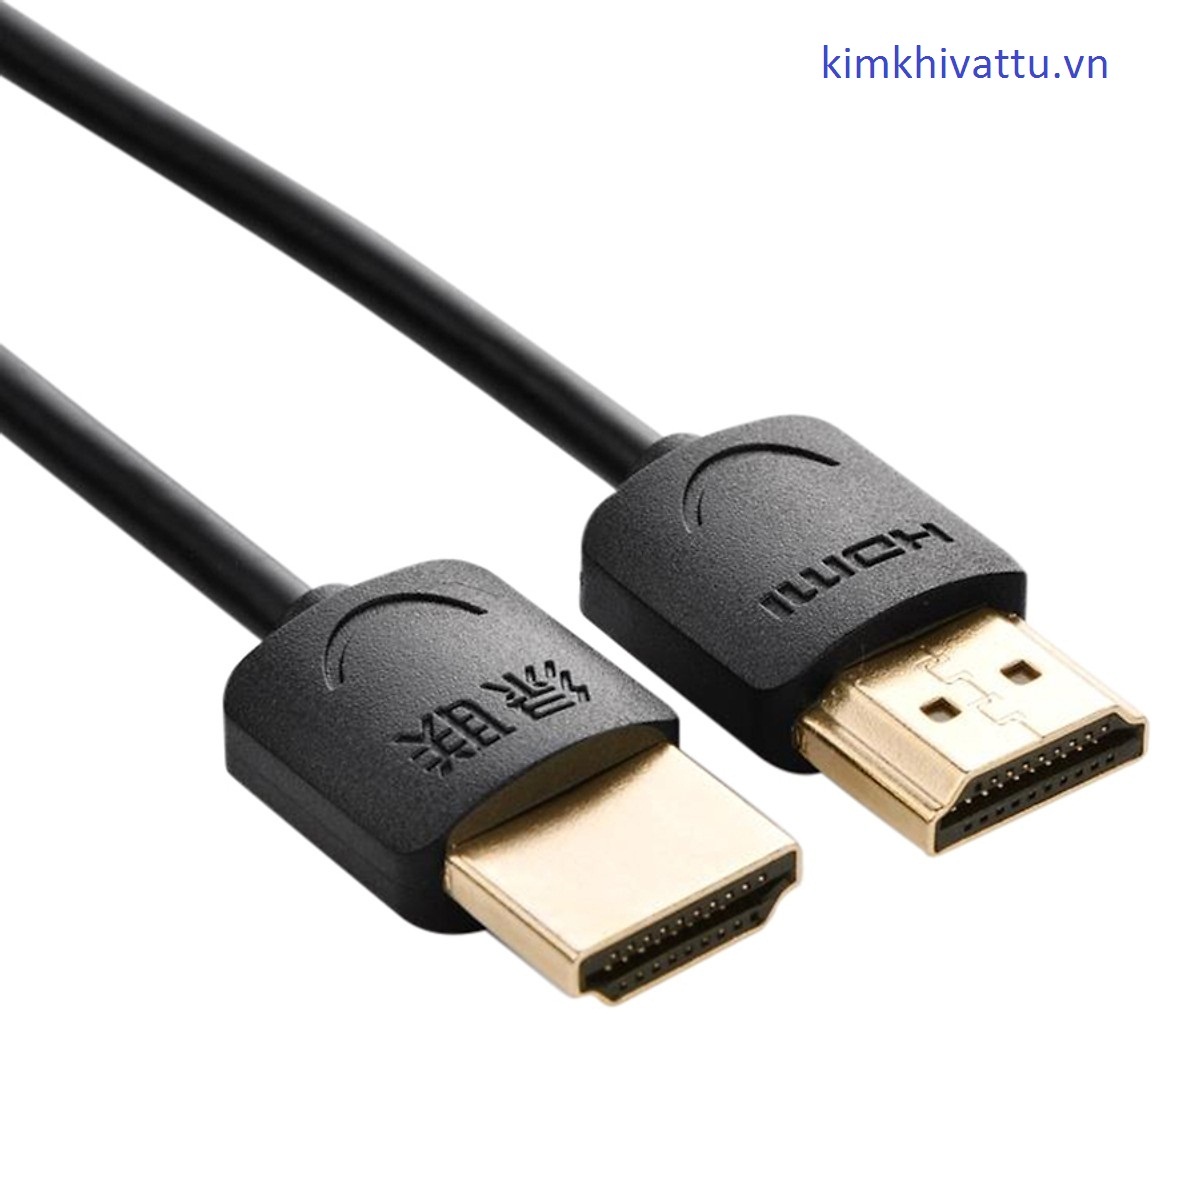 Cáp HDMI Ugreen UG-11198 - 1.5m